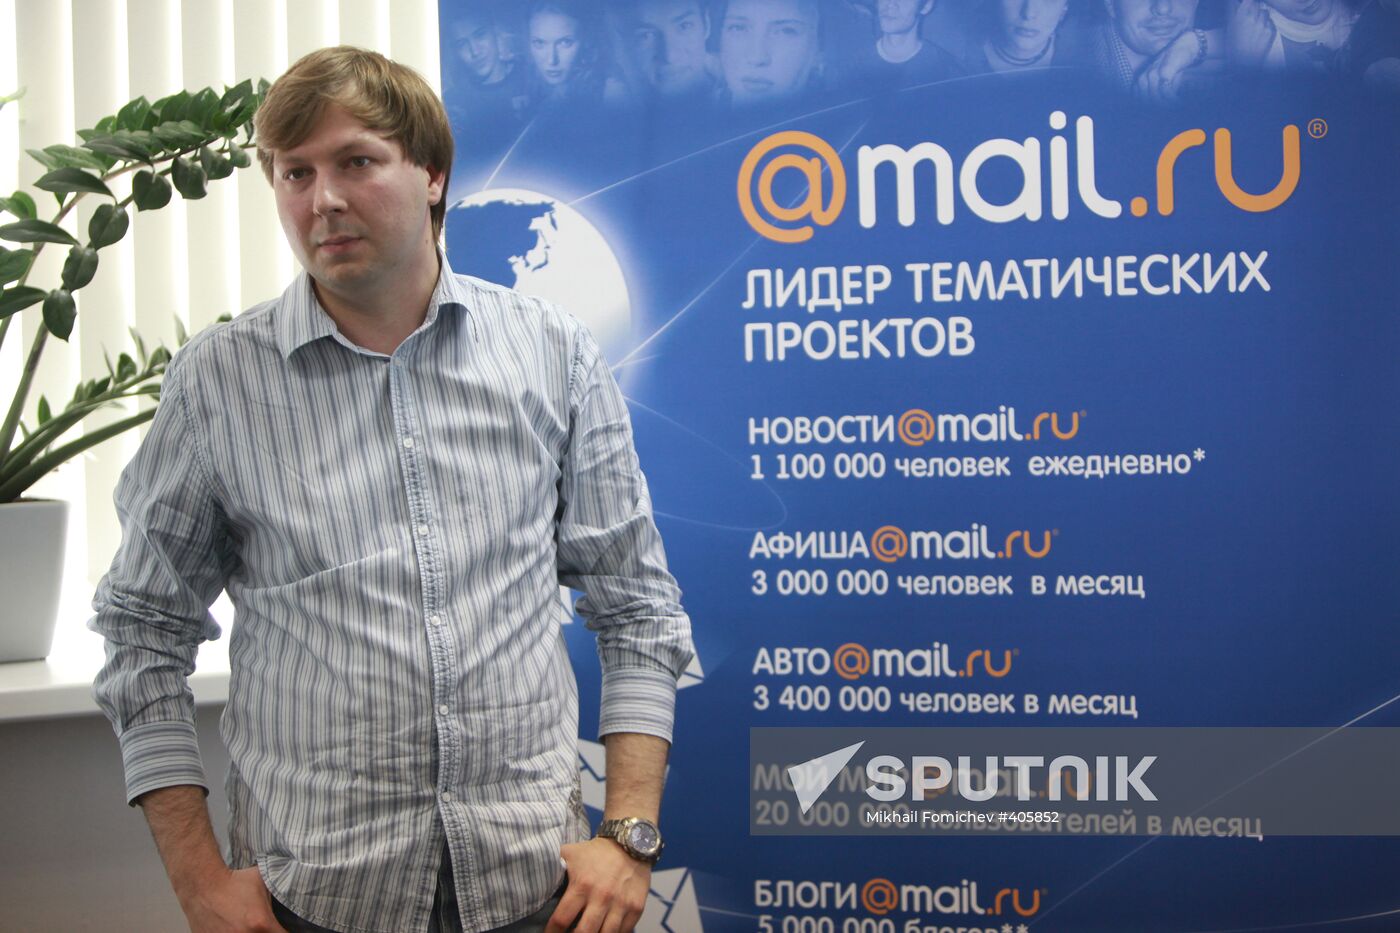 Mail.Ru CEO Dmitry Grishin